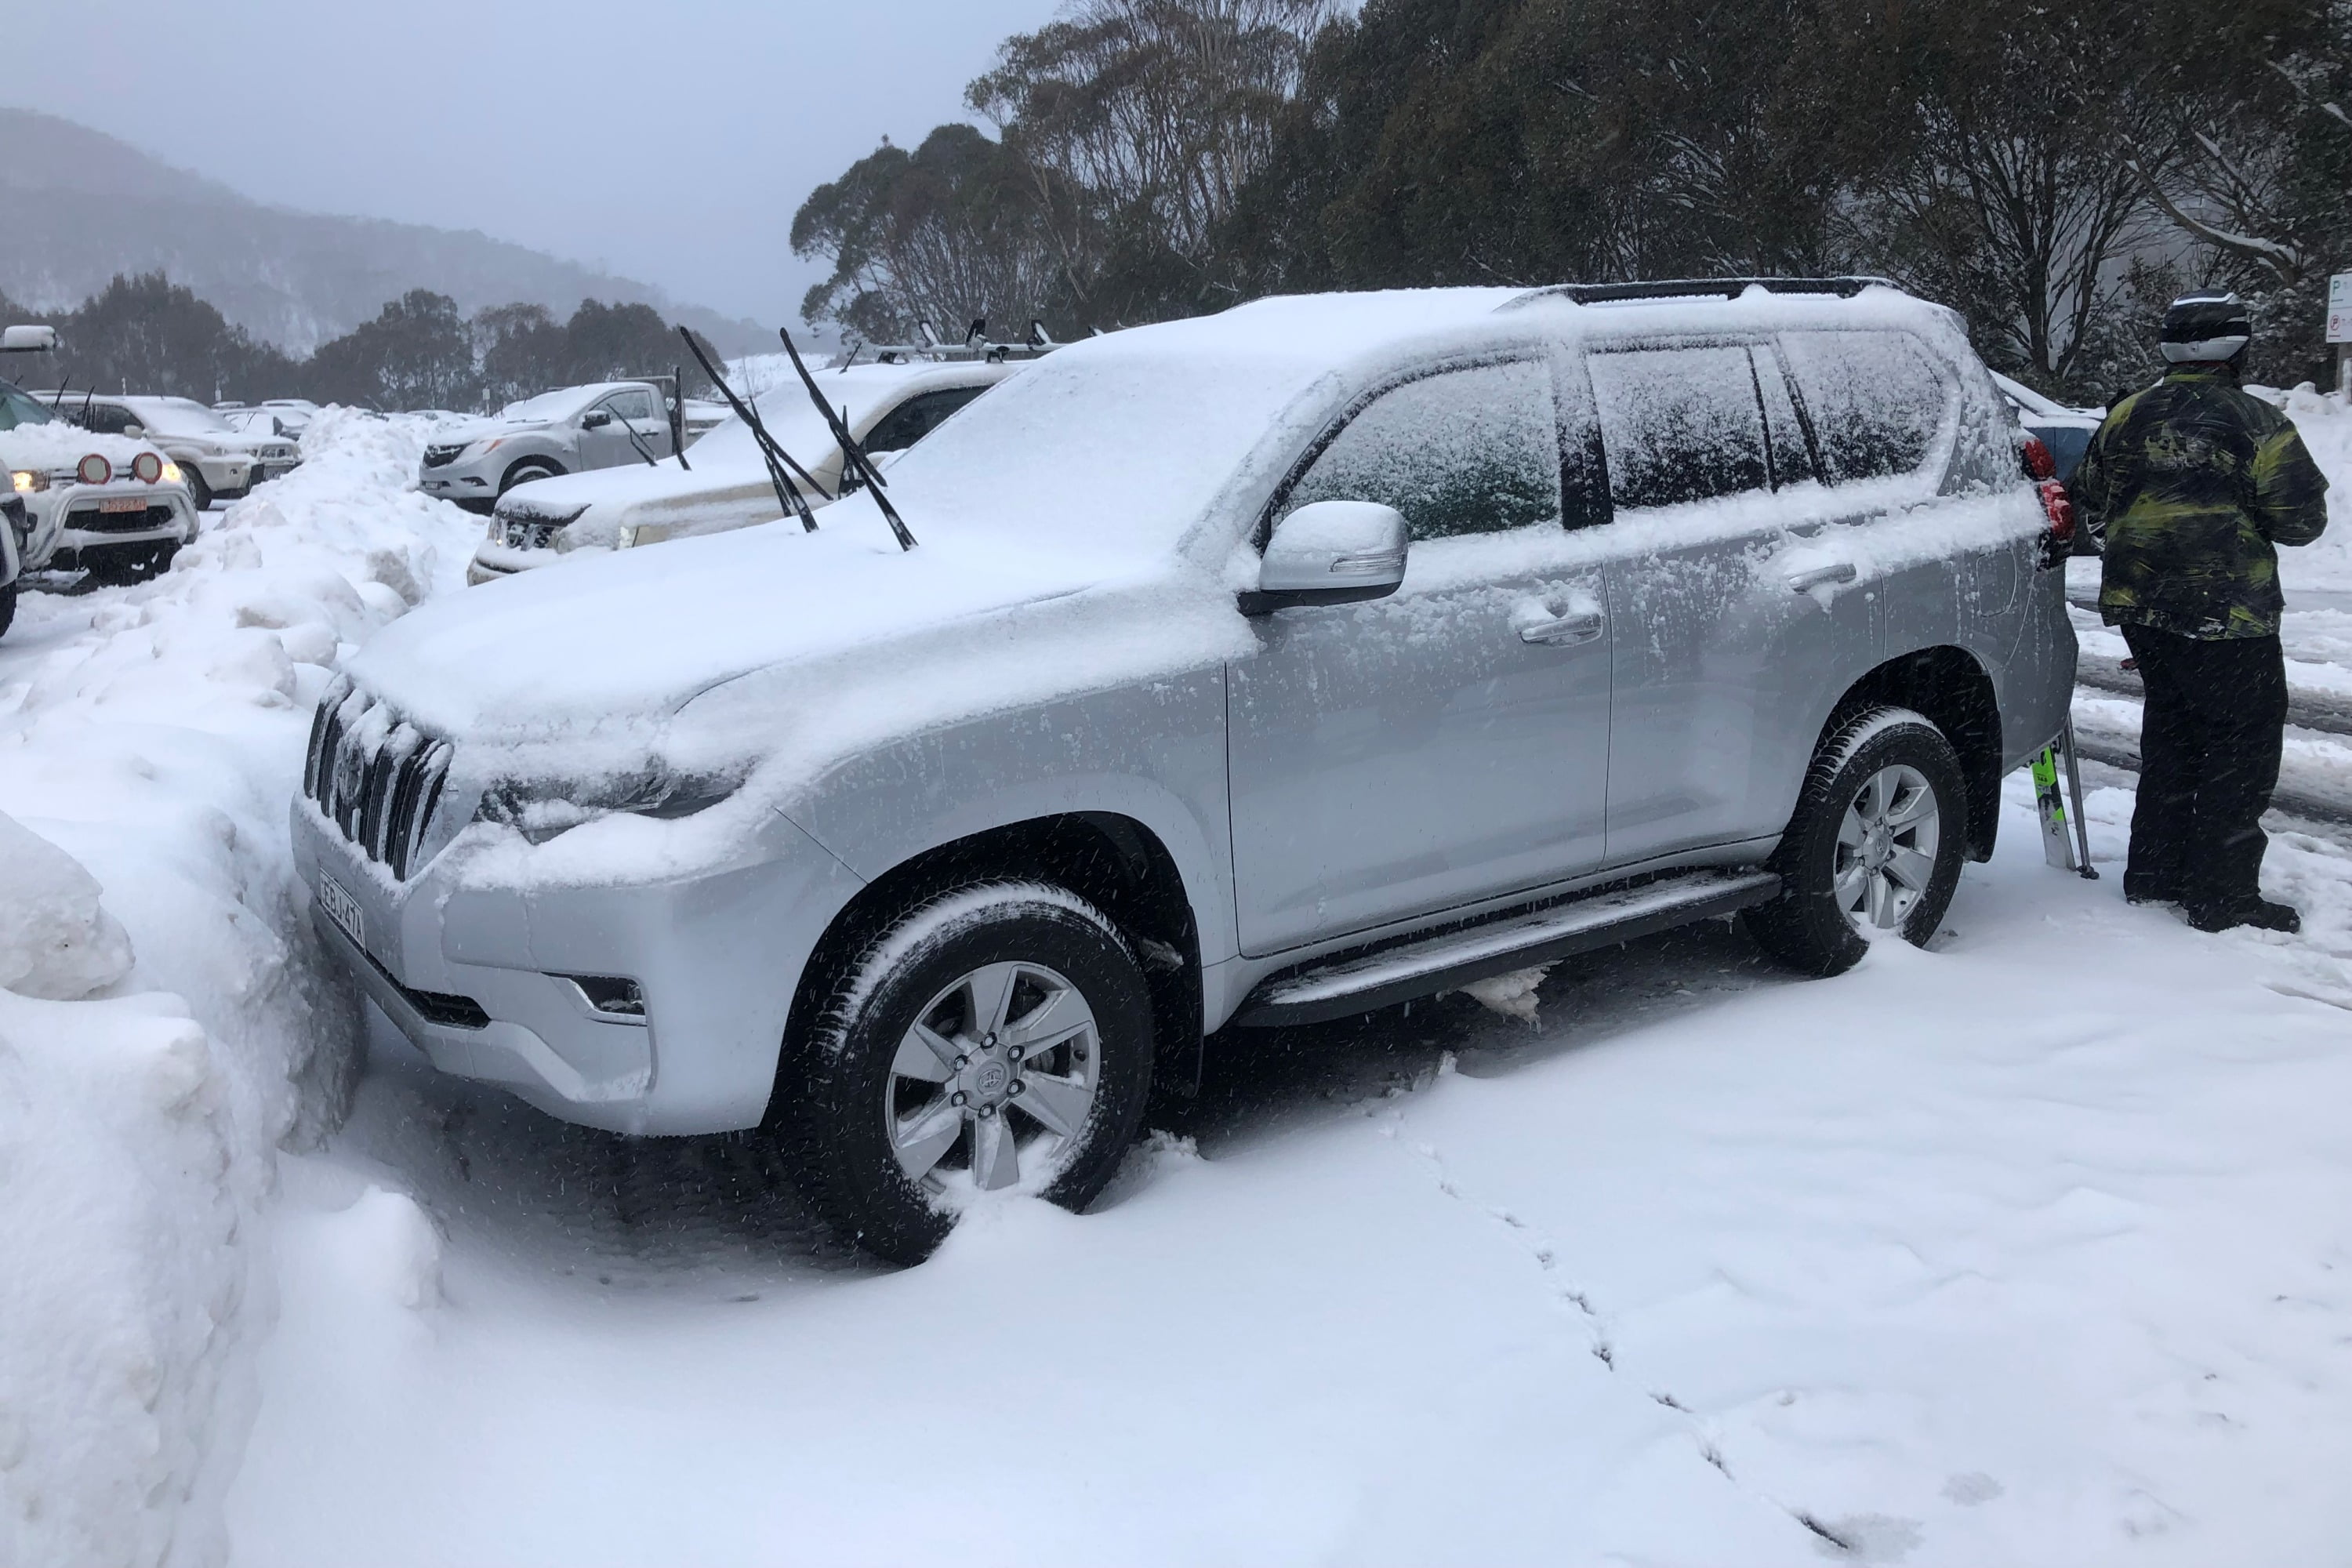 2019-Toyota-Prado-GXL-7 snow parking